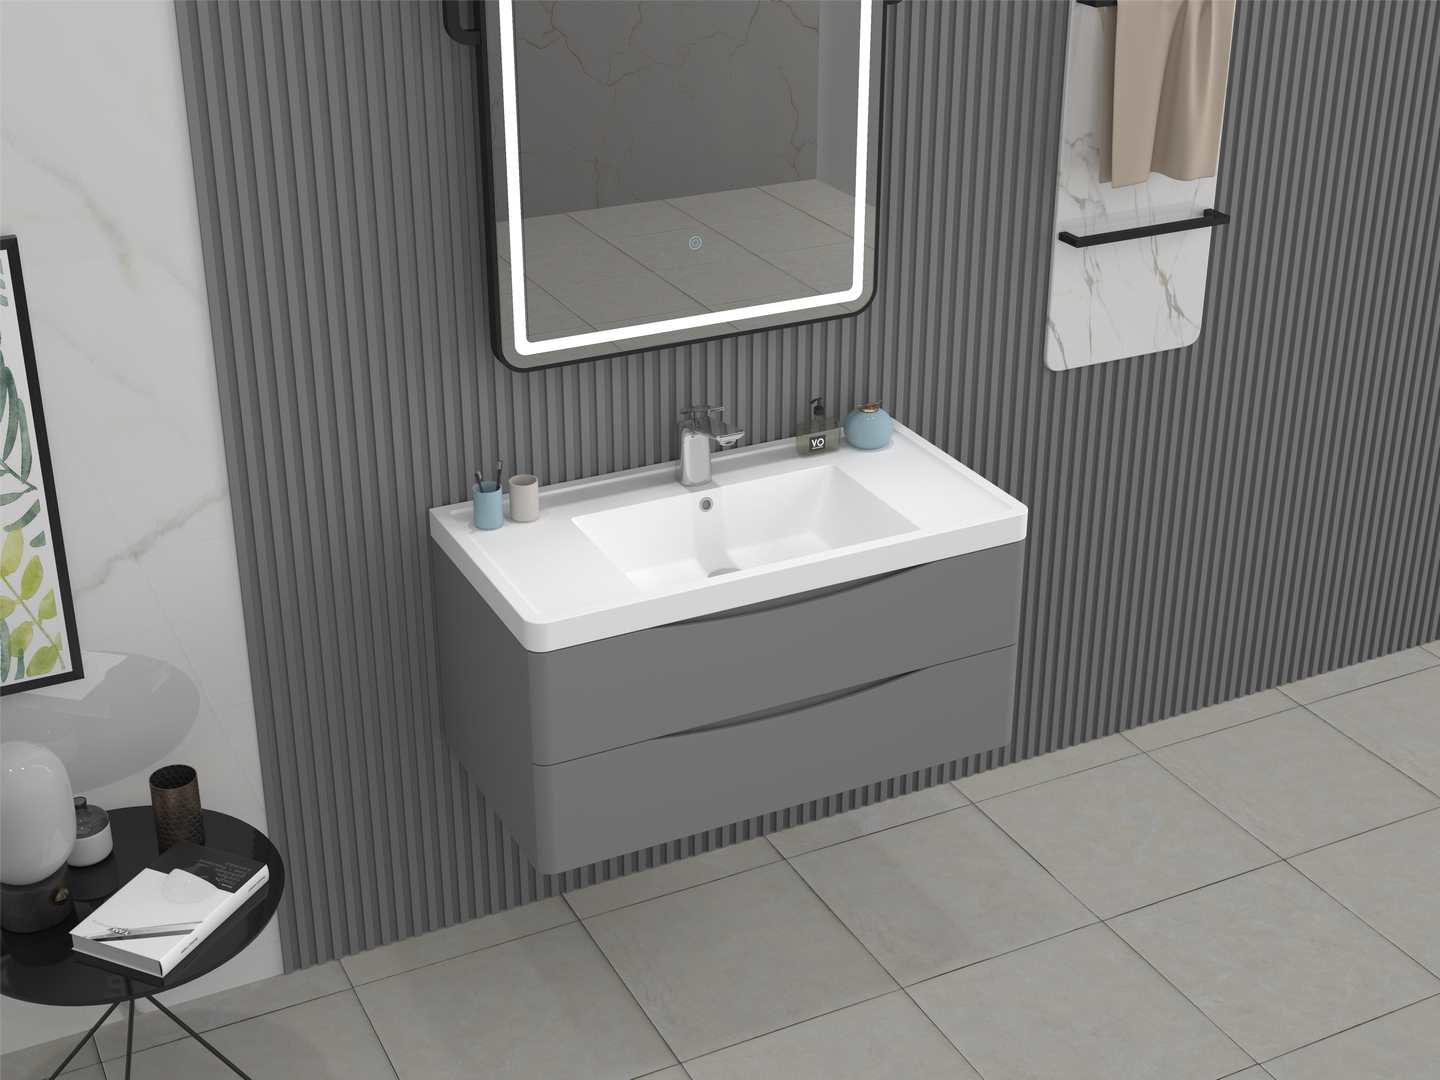 Wall-mounted washbasin with vanity in batheoom from Cpingao